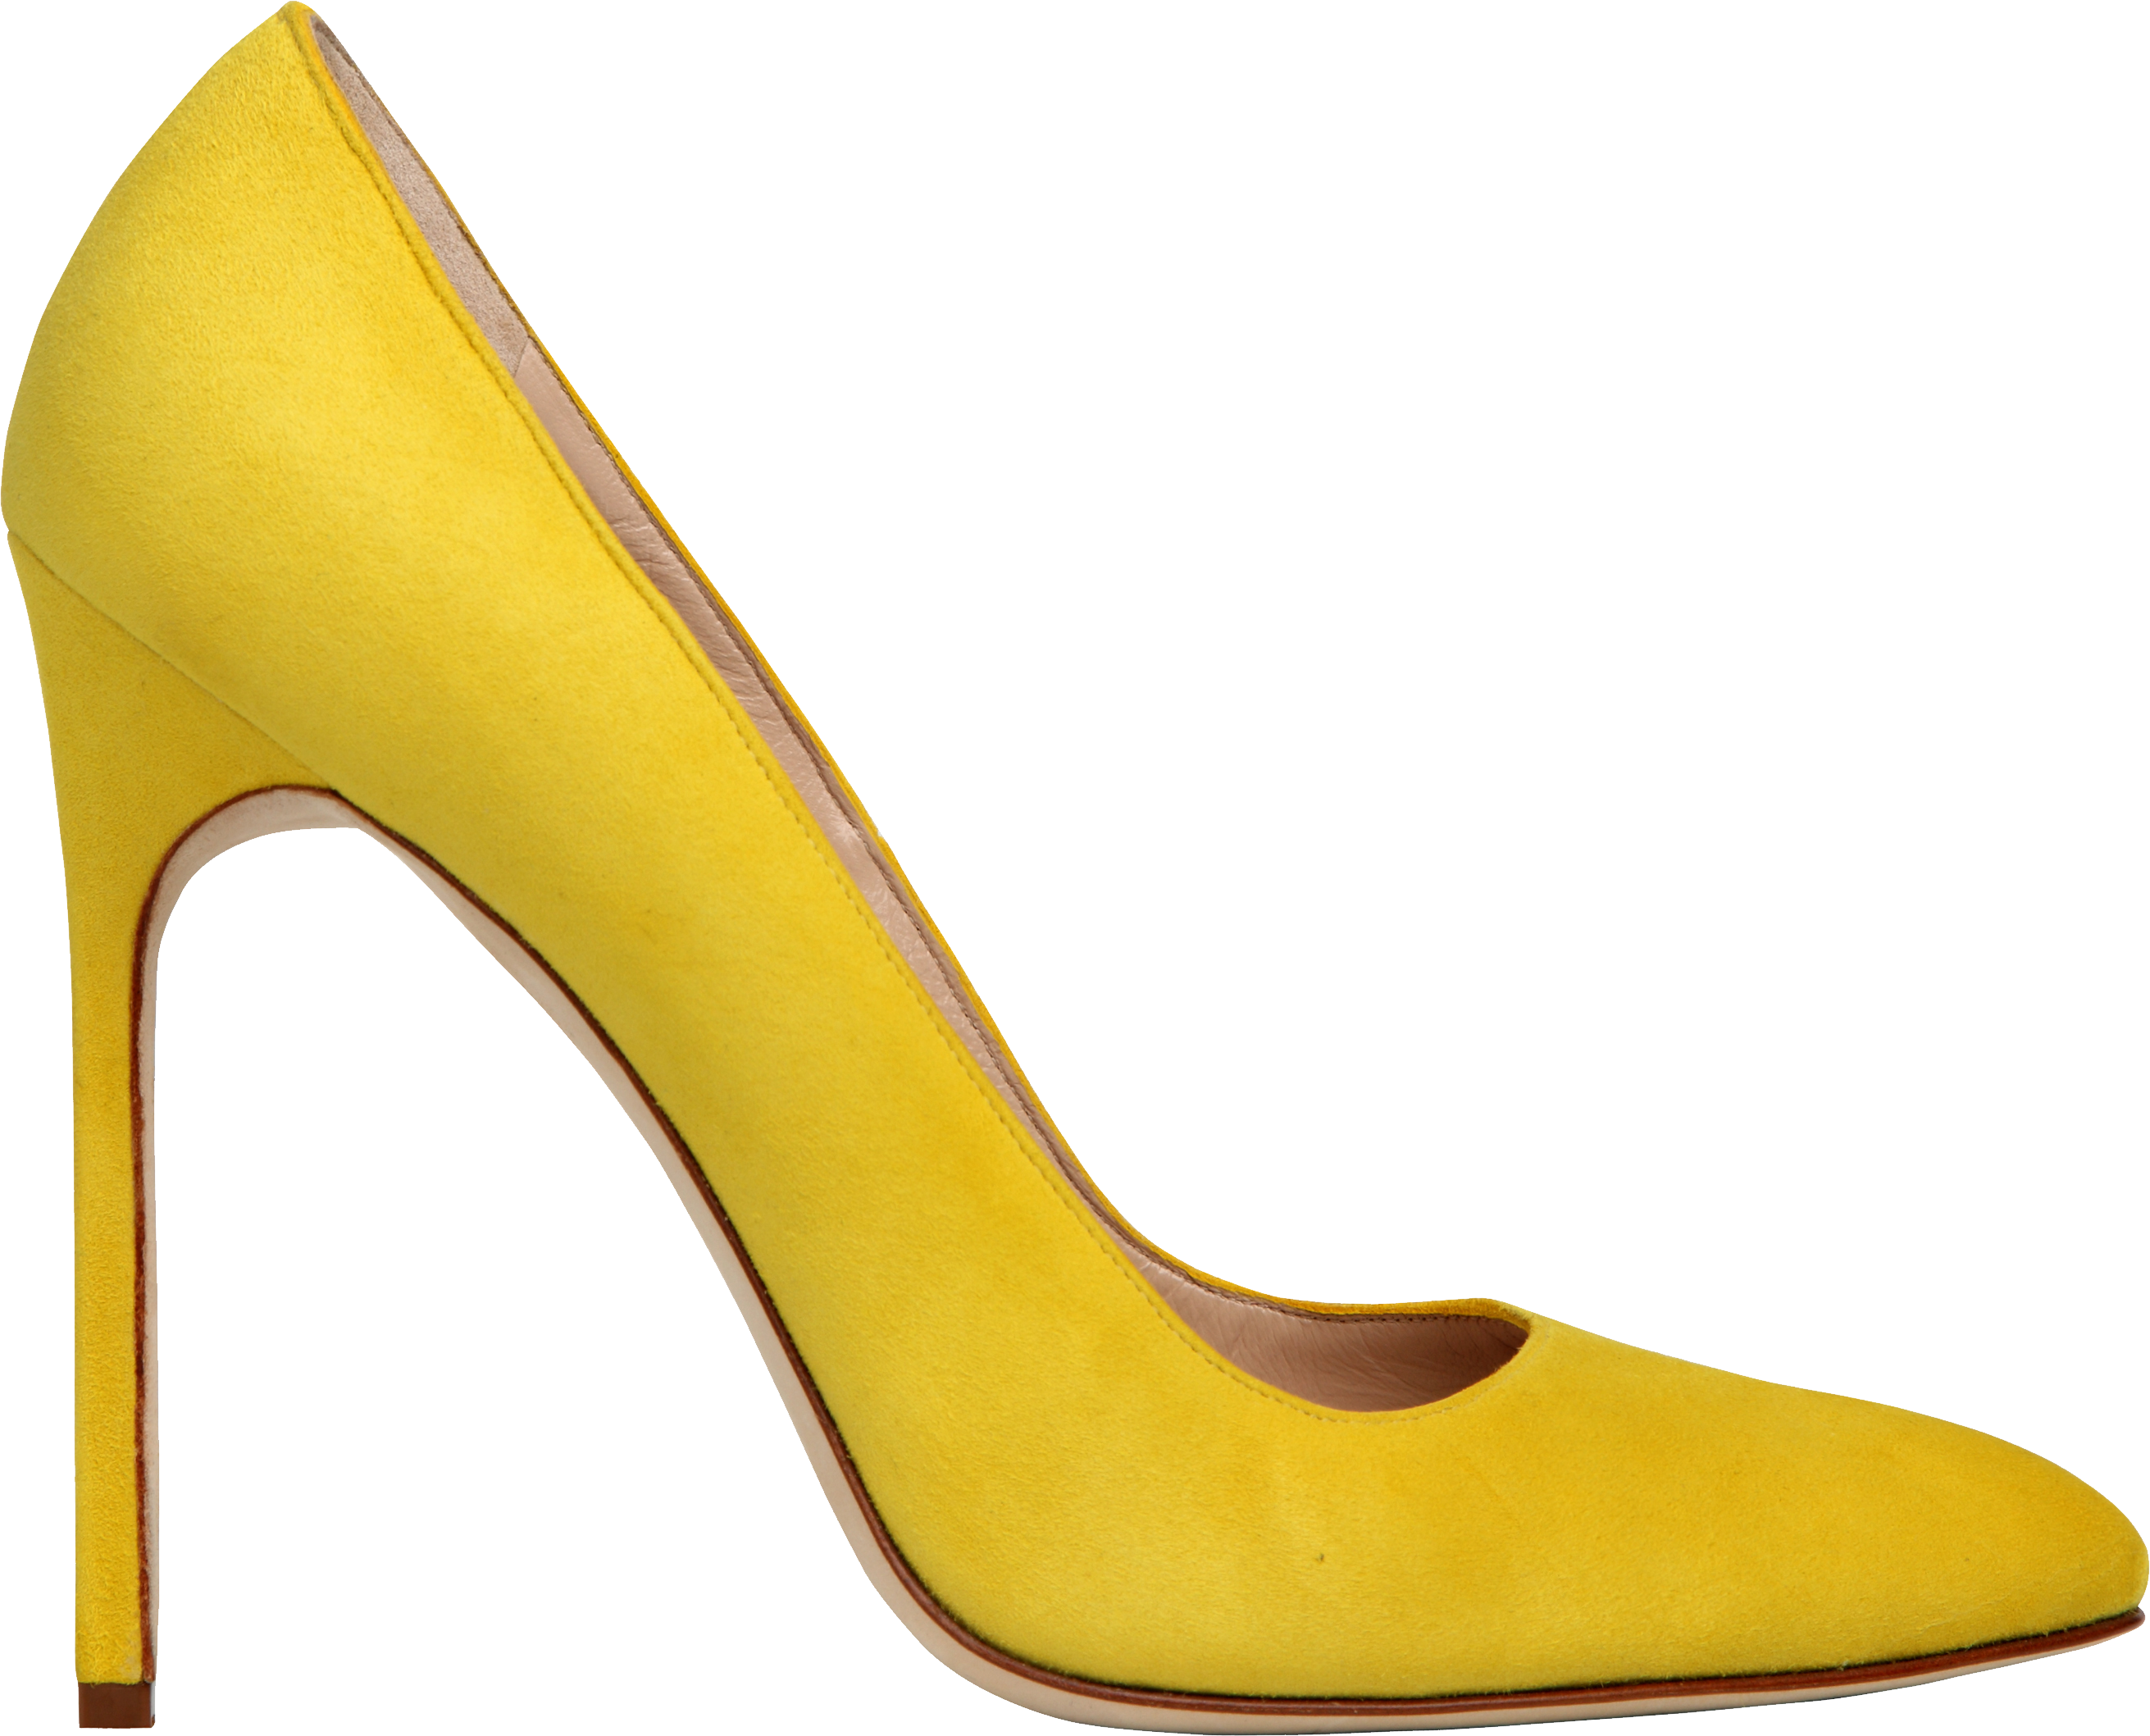 Foot clipart sandal. Yellow women shoe png